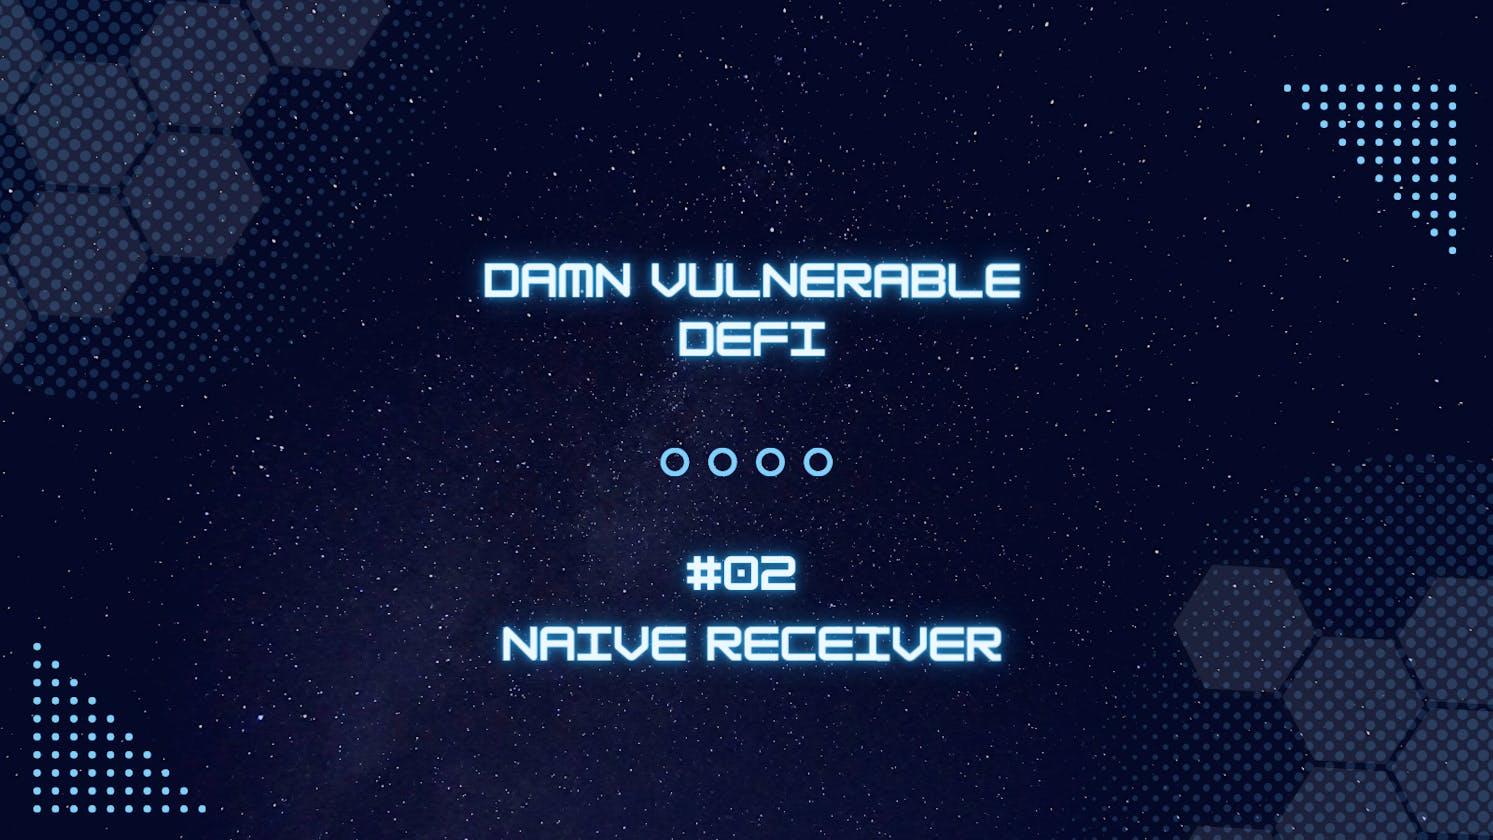 Naive Receiver - Damn Vulnerable DeFi #02